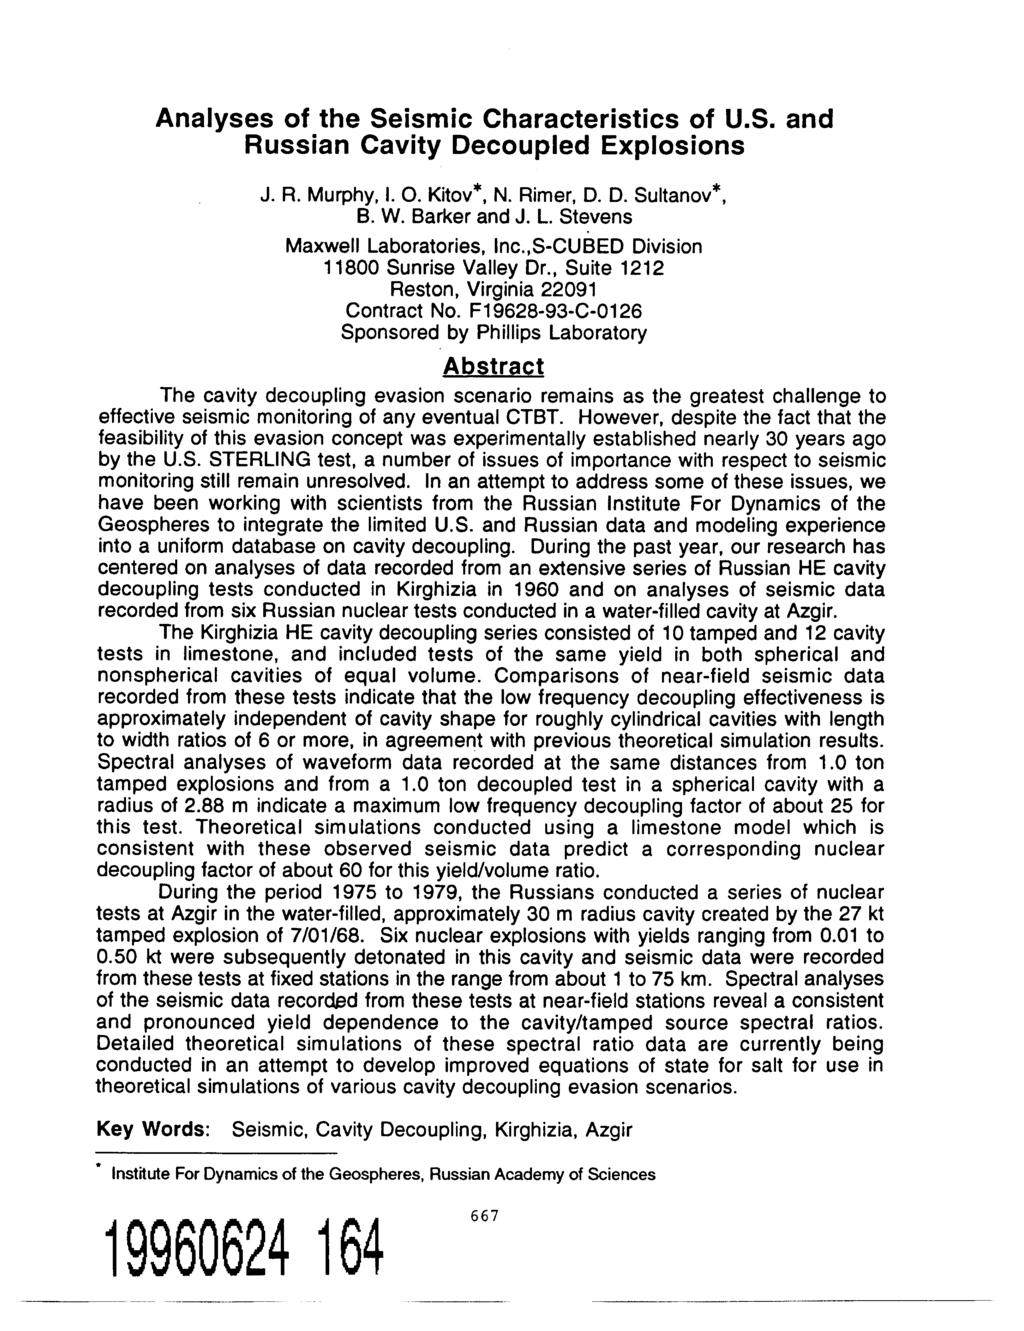 Analyses of the Seismic Characteristics of U.S. and Russian Cavity Decoupled Explosions J. R. Murphy, I. 0. Kitov*, N. Rimer, D. D. Sultanov*, B. W. Barker and J. L. Stevens Maxwell Laboratories, Inc.